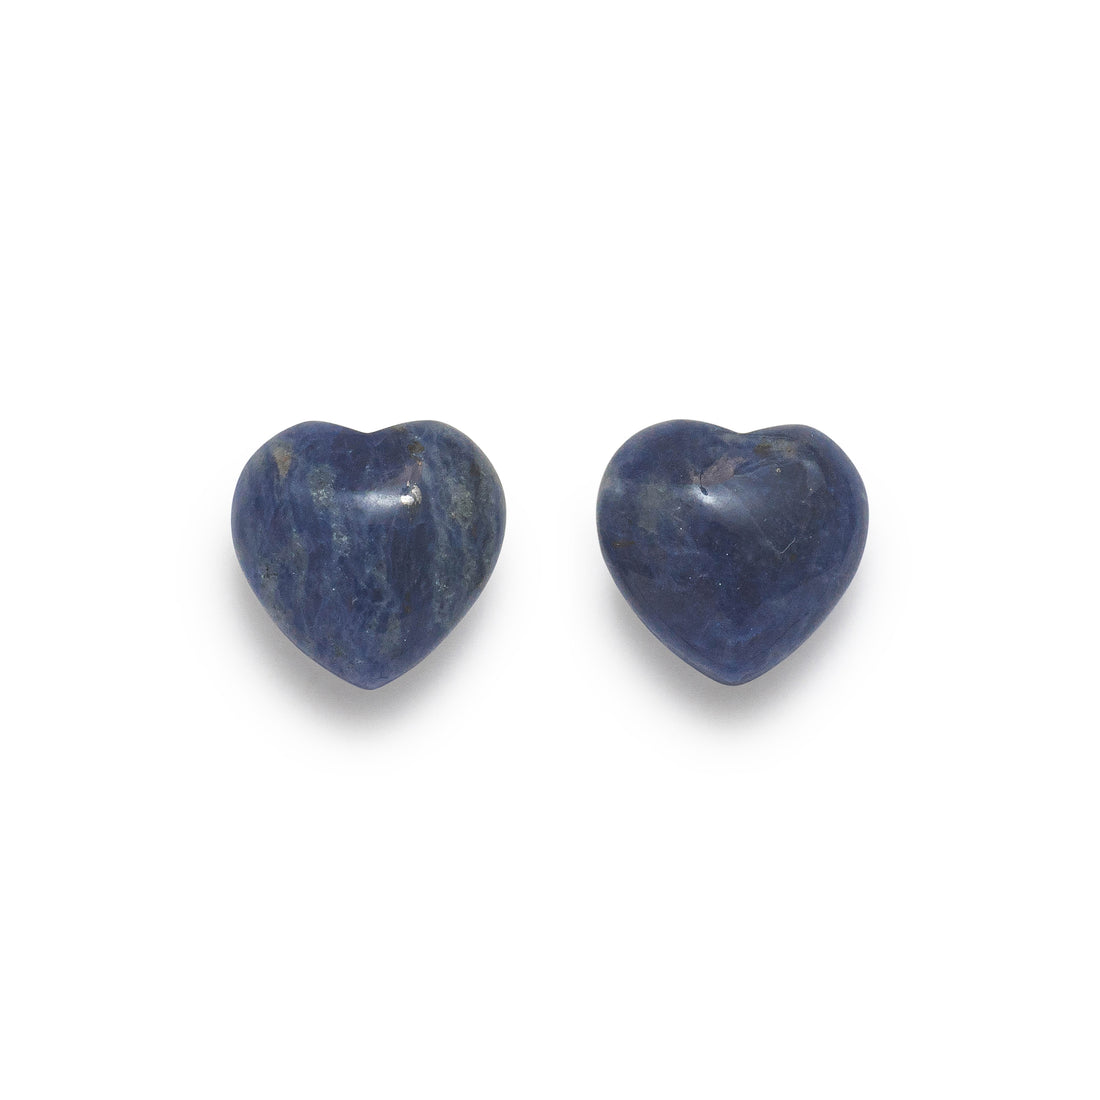 Small heart in Blue Sodalite stone